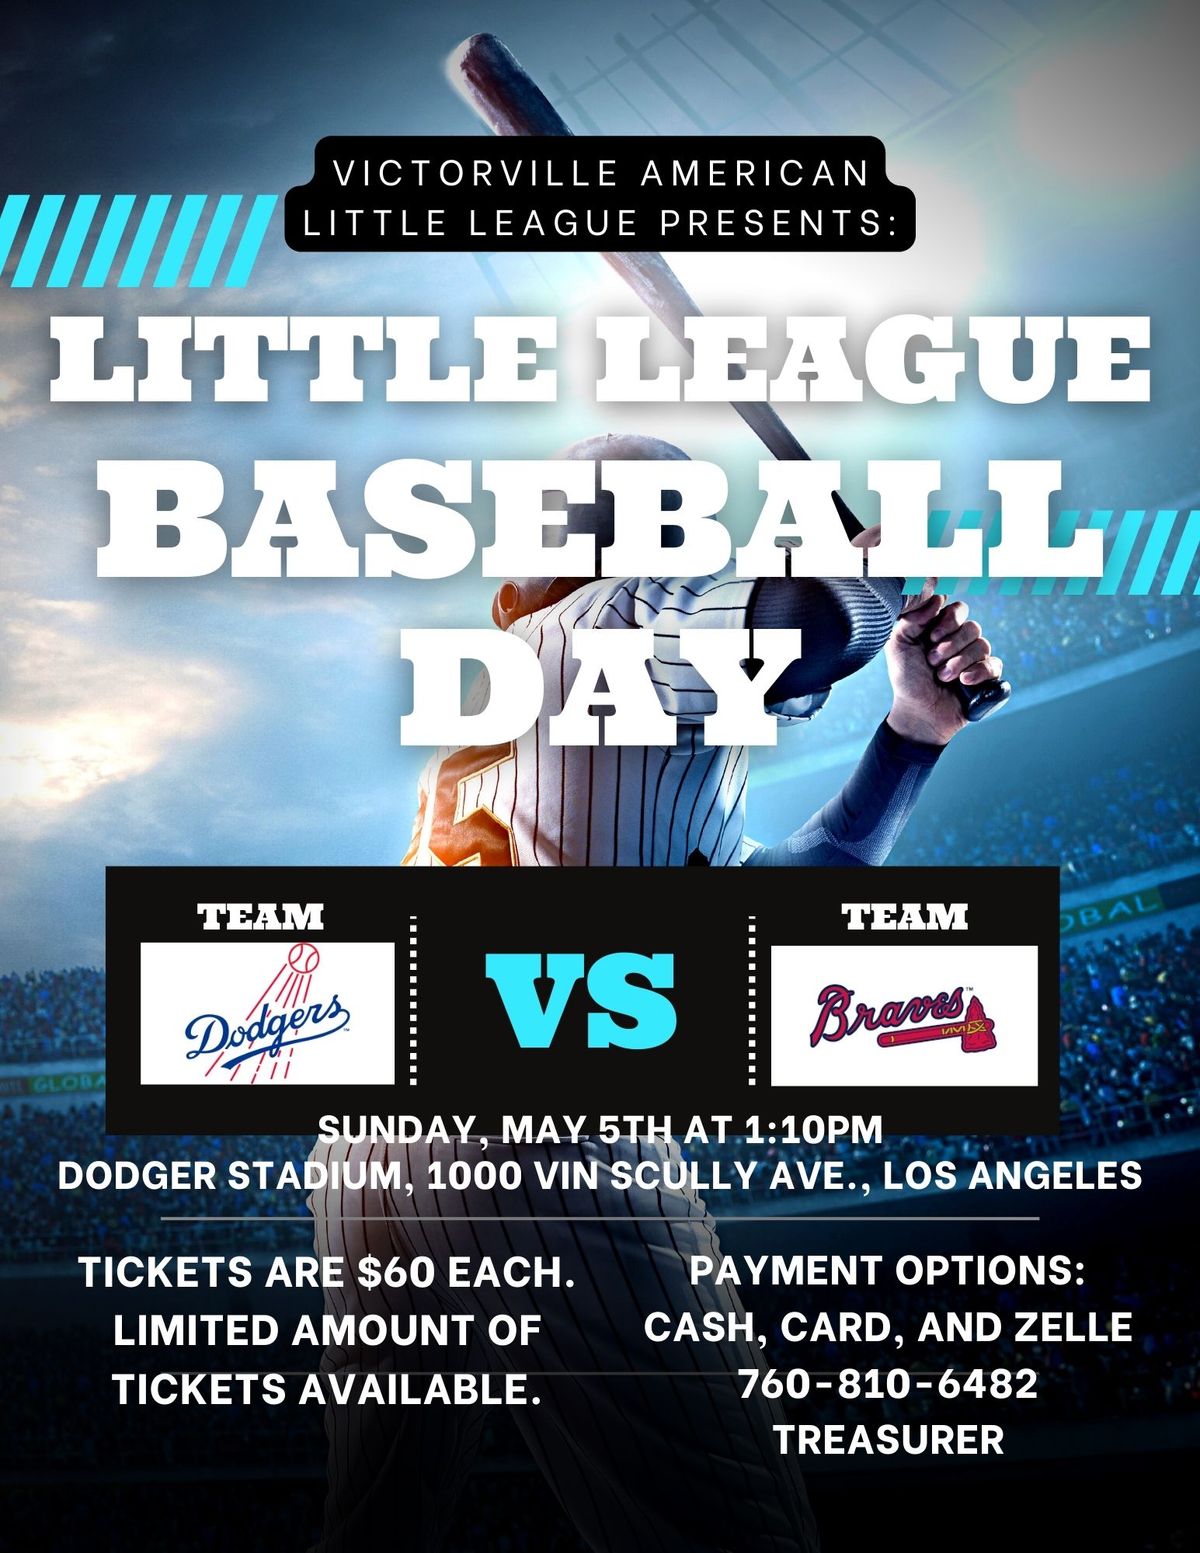 Little League Day @ Dodgers Stadium